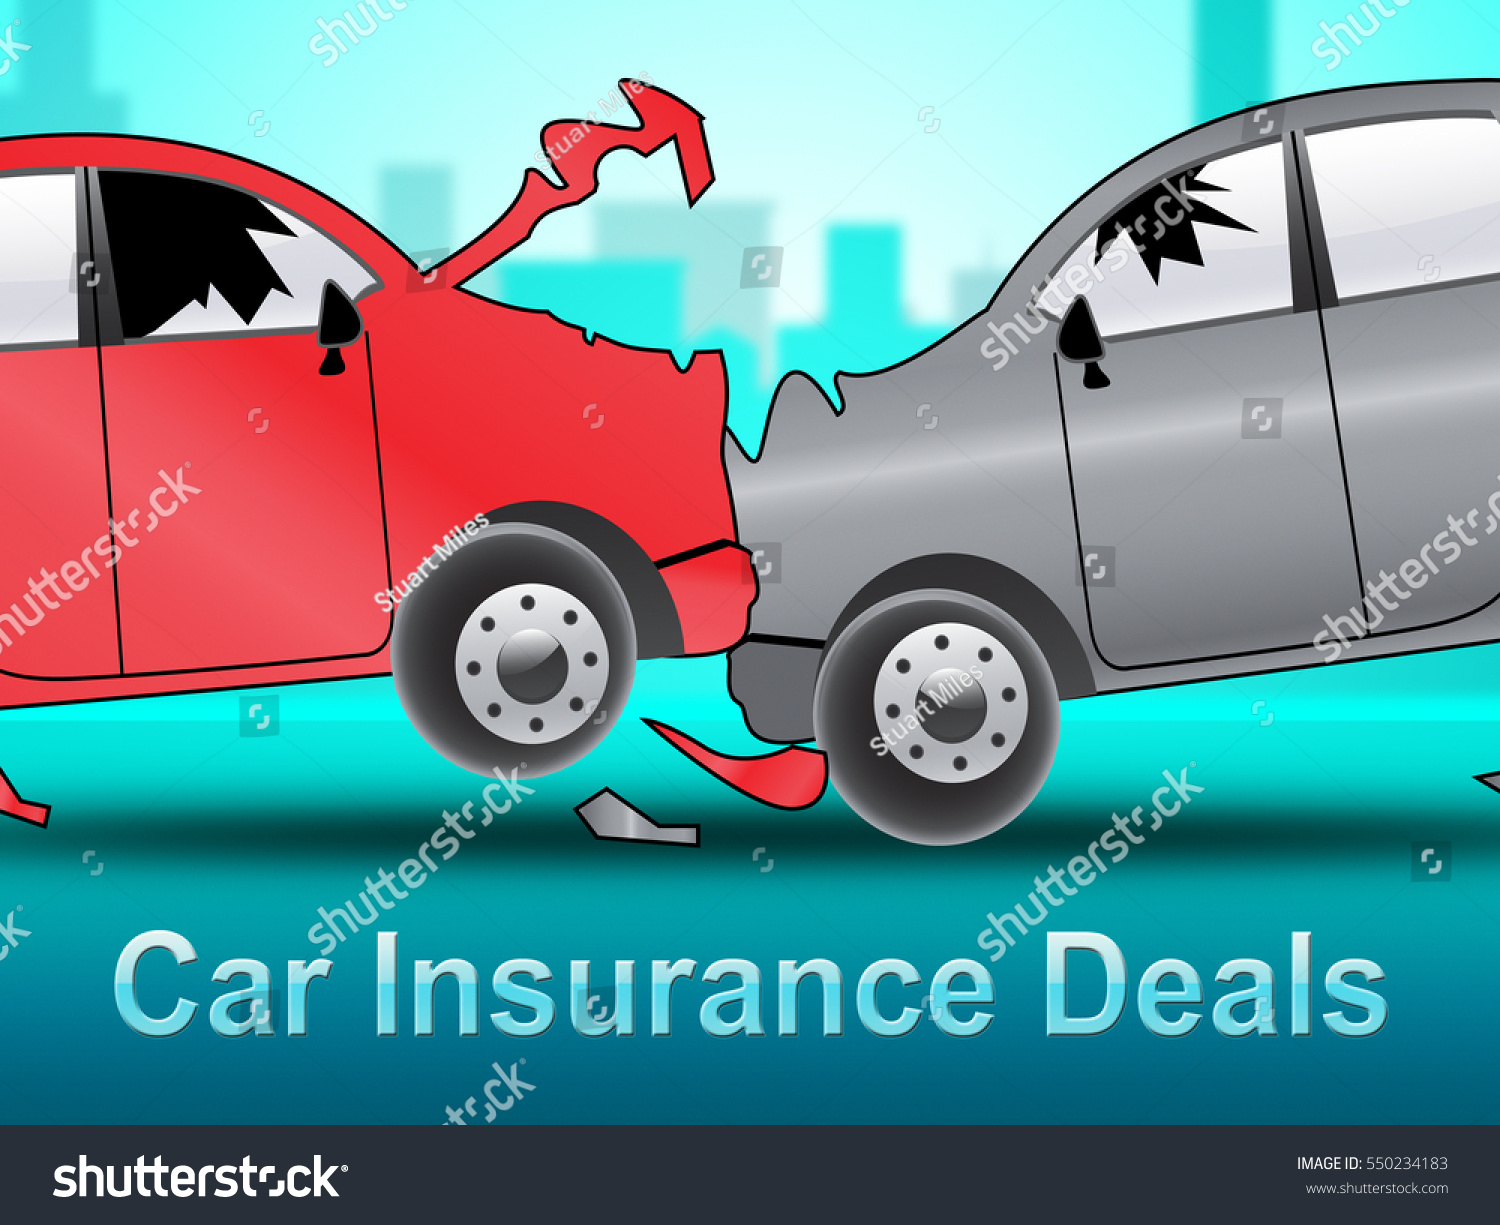 Car Insurance Deals Crash Shows Car Stock Illustration 550234183 regarding dimensions 1500 X 1225